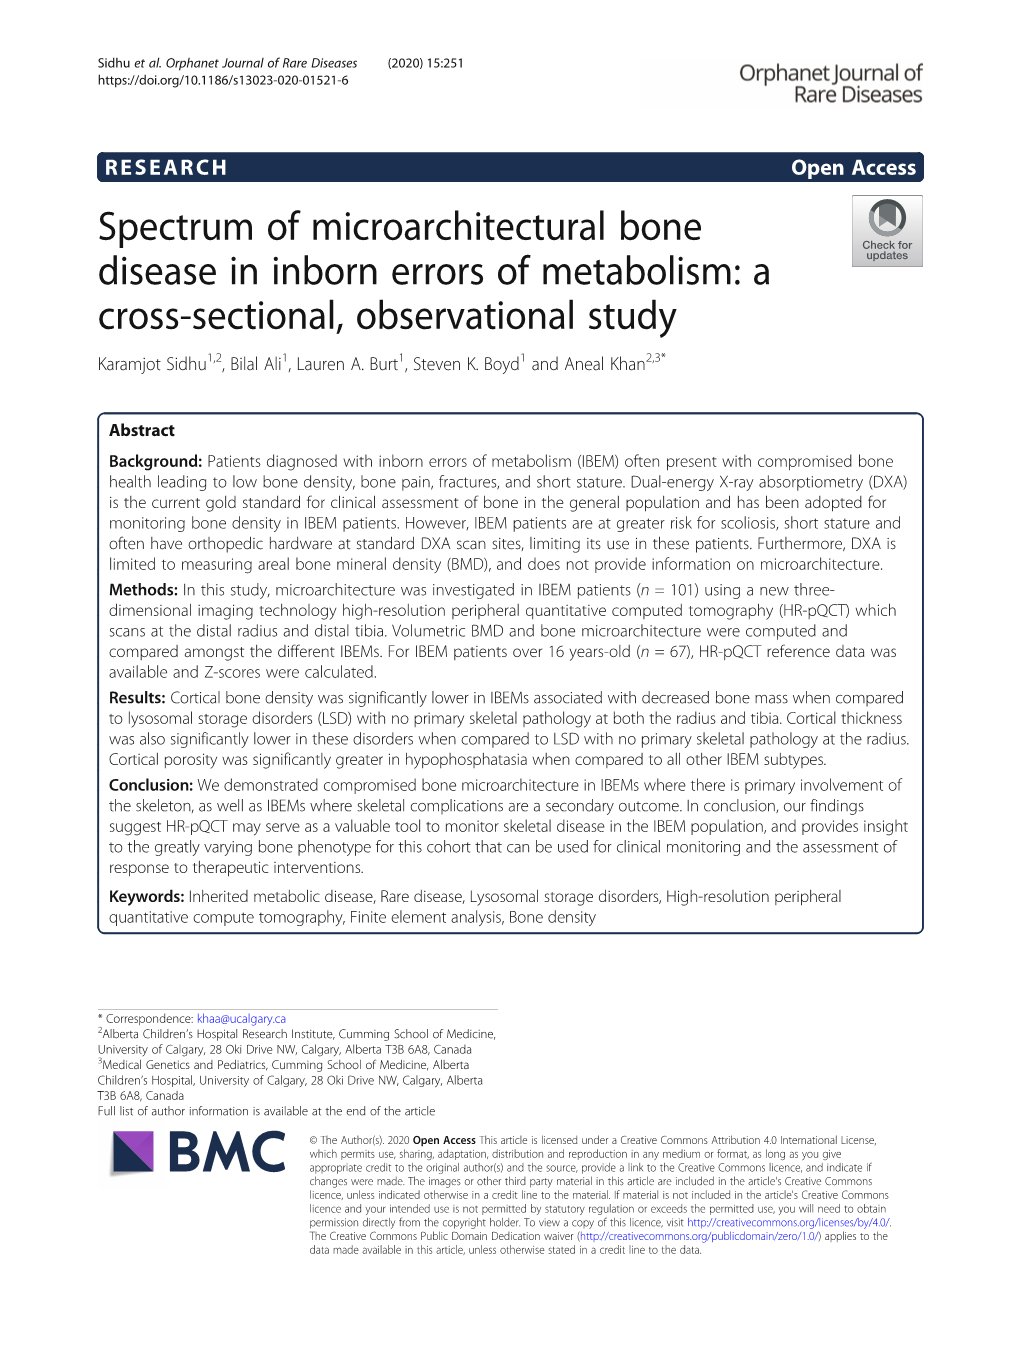 Spectrum of Microarchitectural Bone Disease in Inborn Errors of Metabolism: a Cross-Sectional, Observational Study Karamjot Sidhu1,2, Bilal Ali1, Lauren A